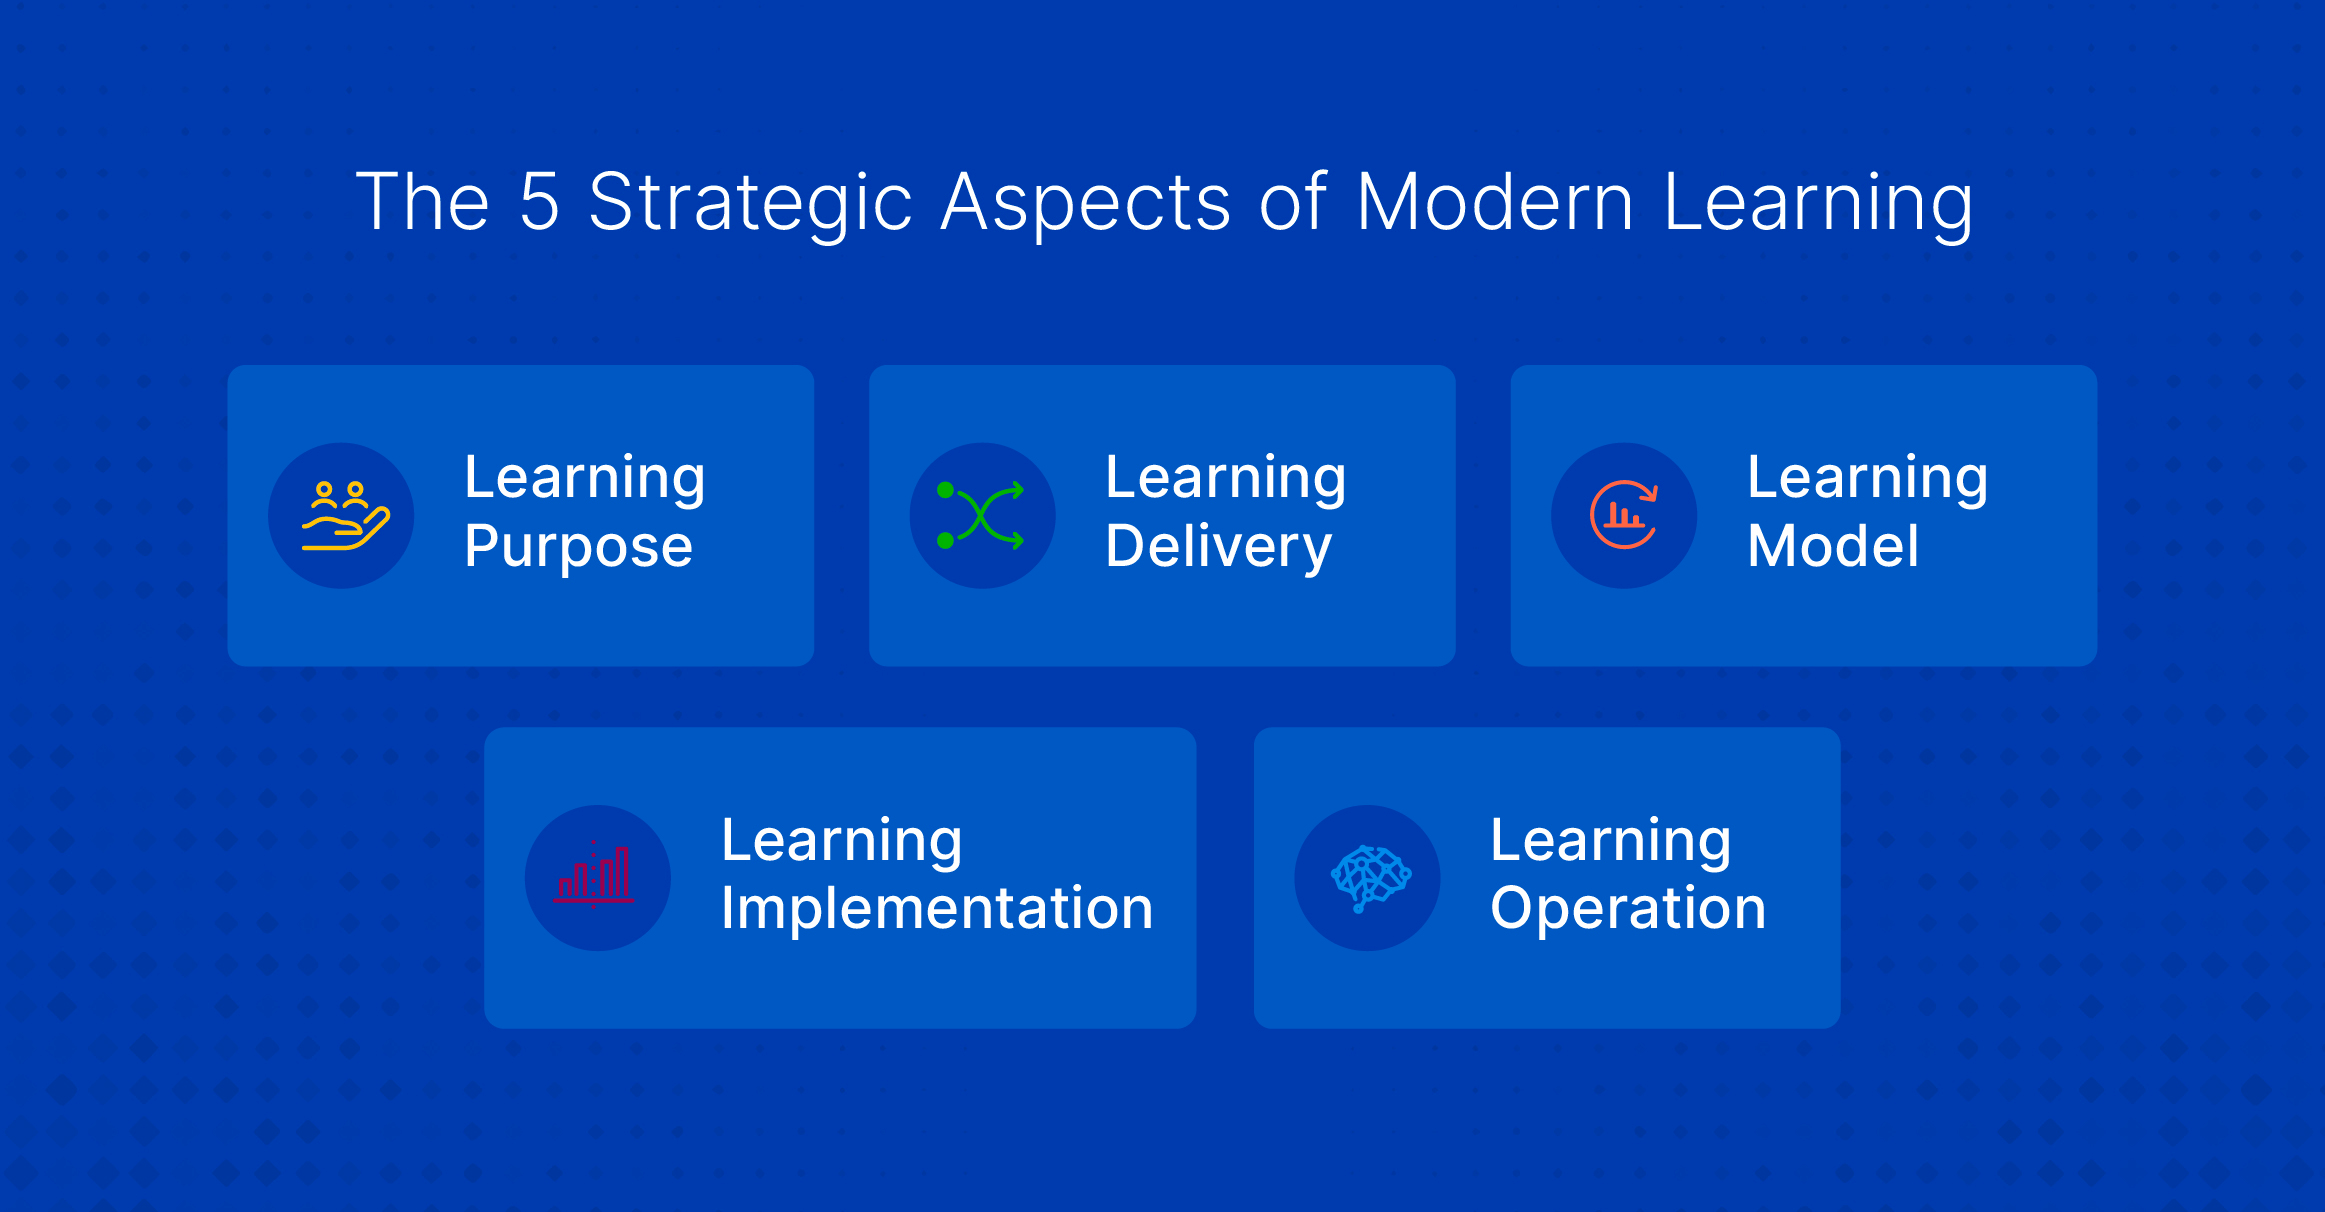 adaptive learning technology split into 5 strategic aspects